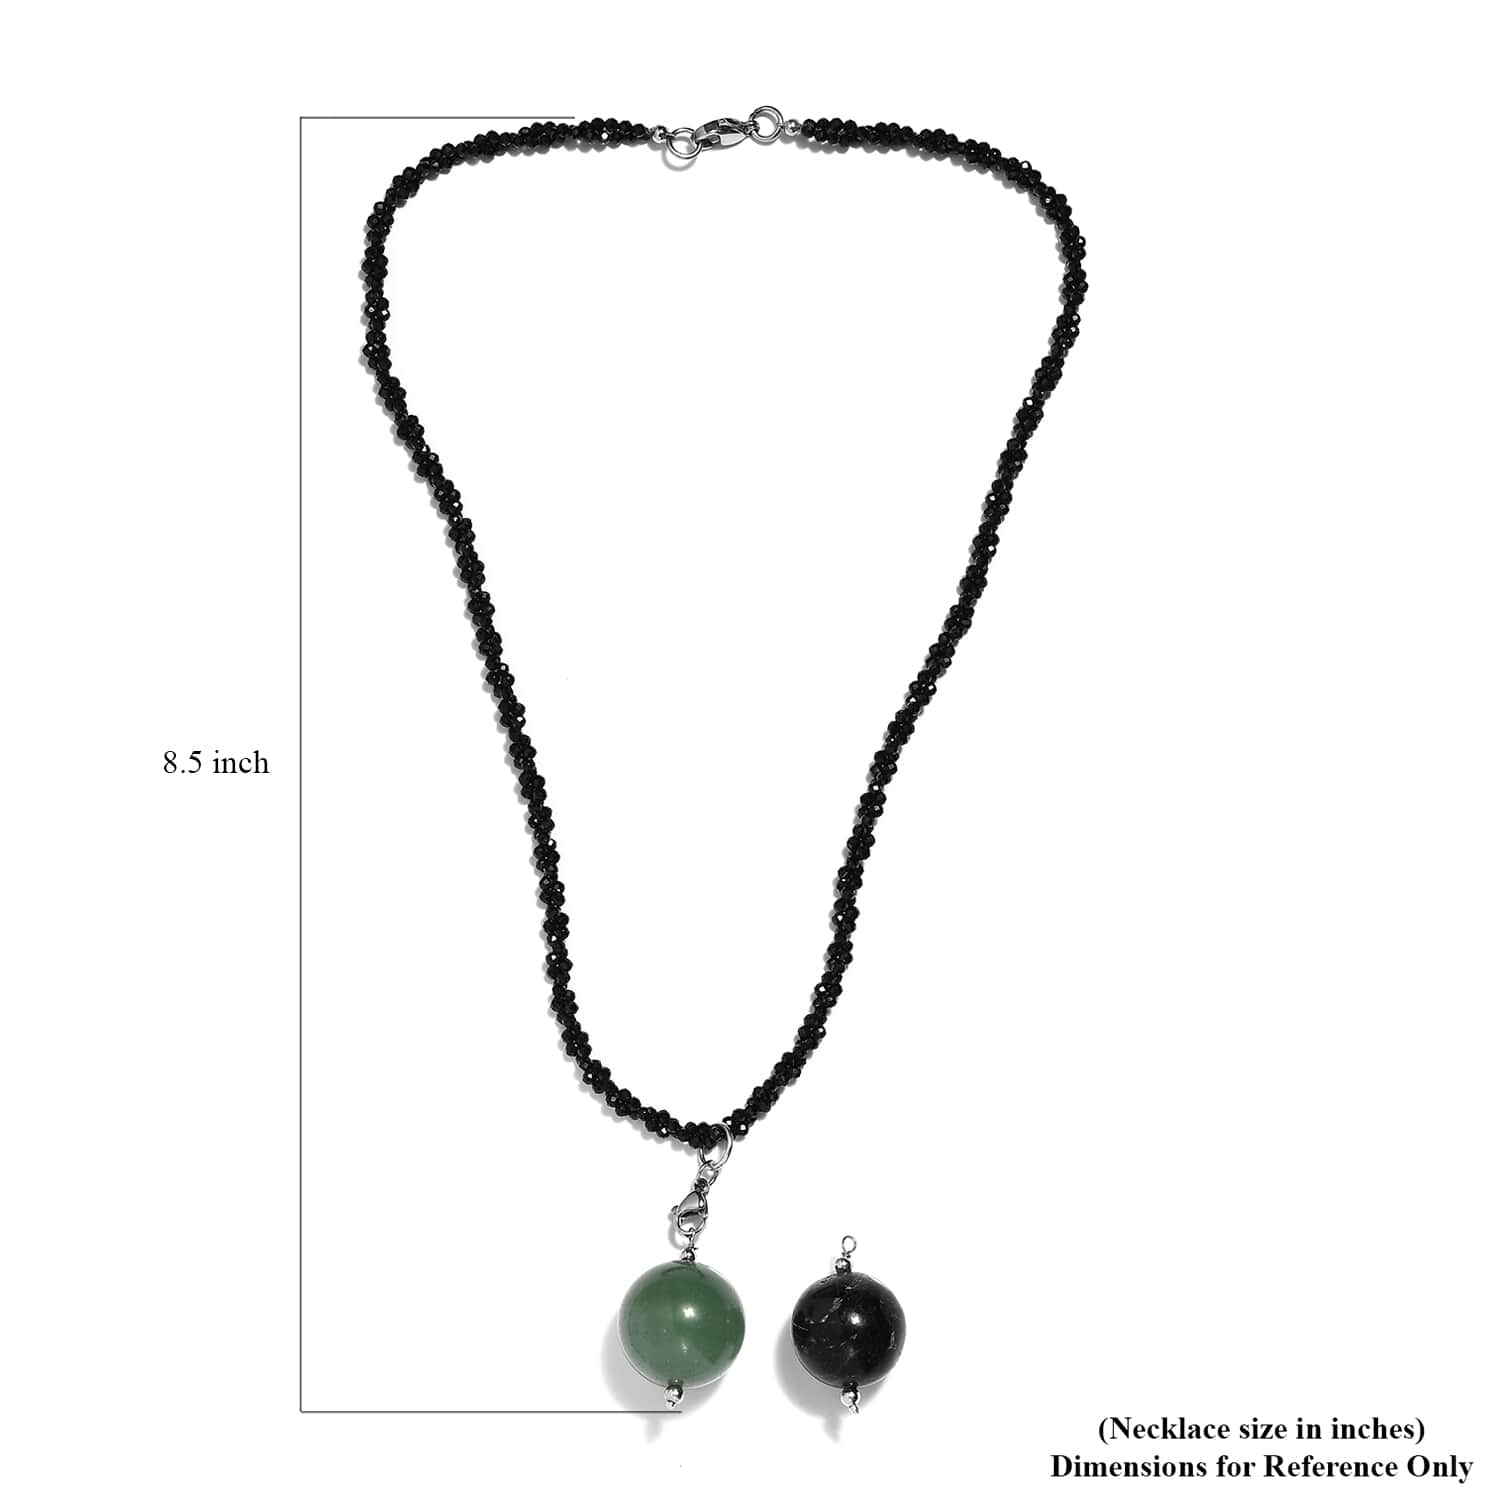 Buy Green Aventurine, Black Agate Pendant with Thai Black Spinel